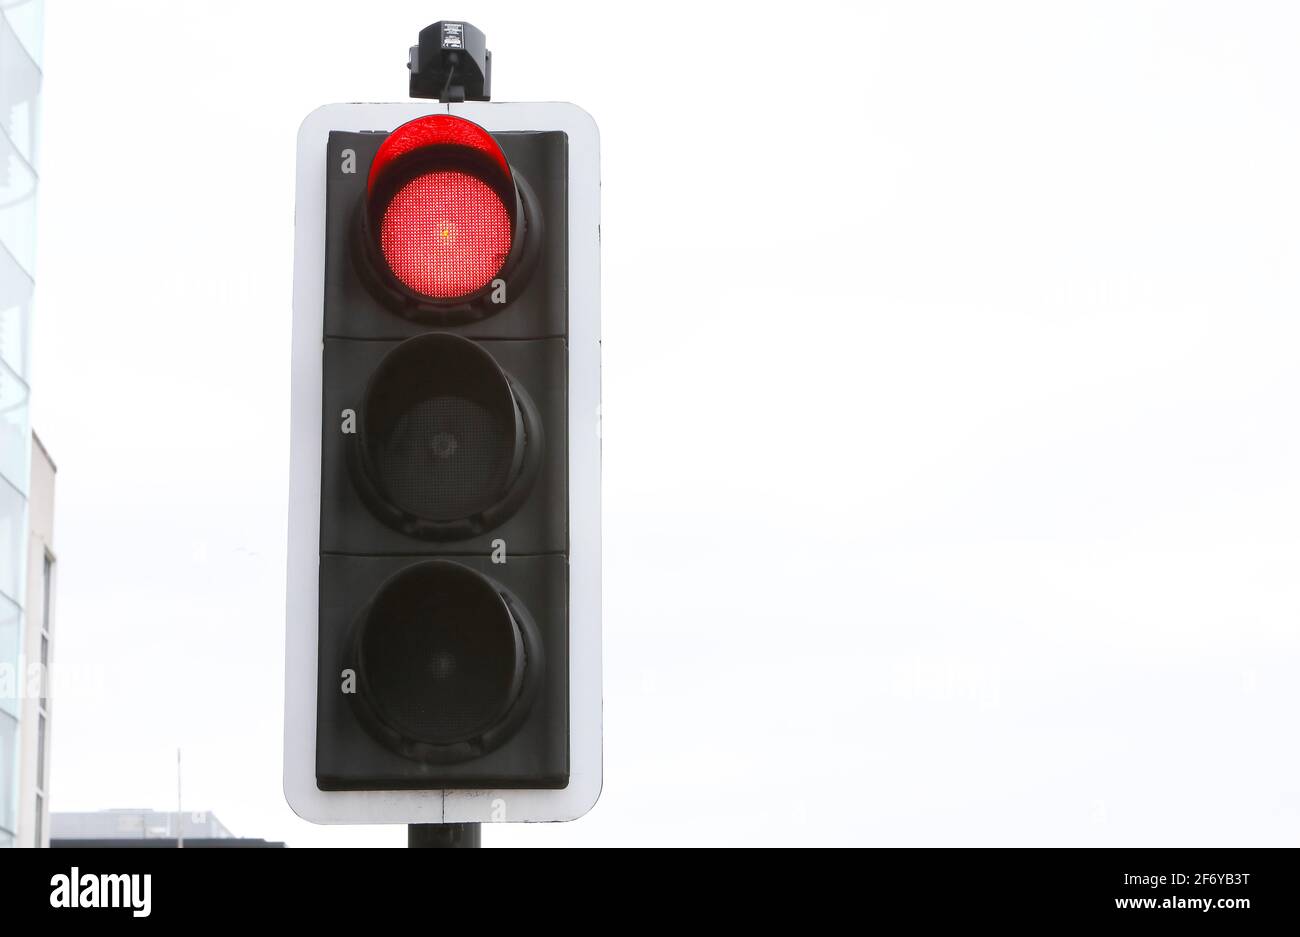 Traffic light on red, UK Stock Photo